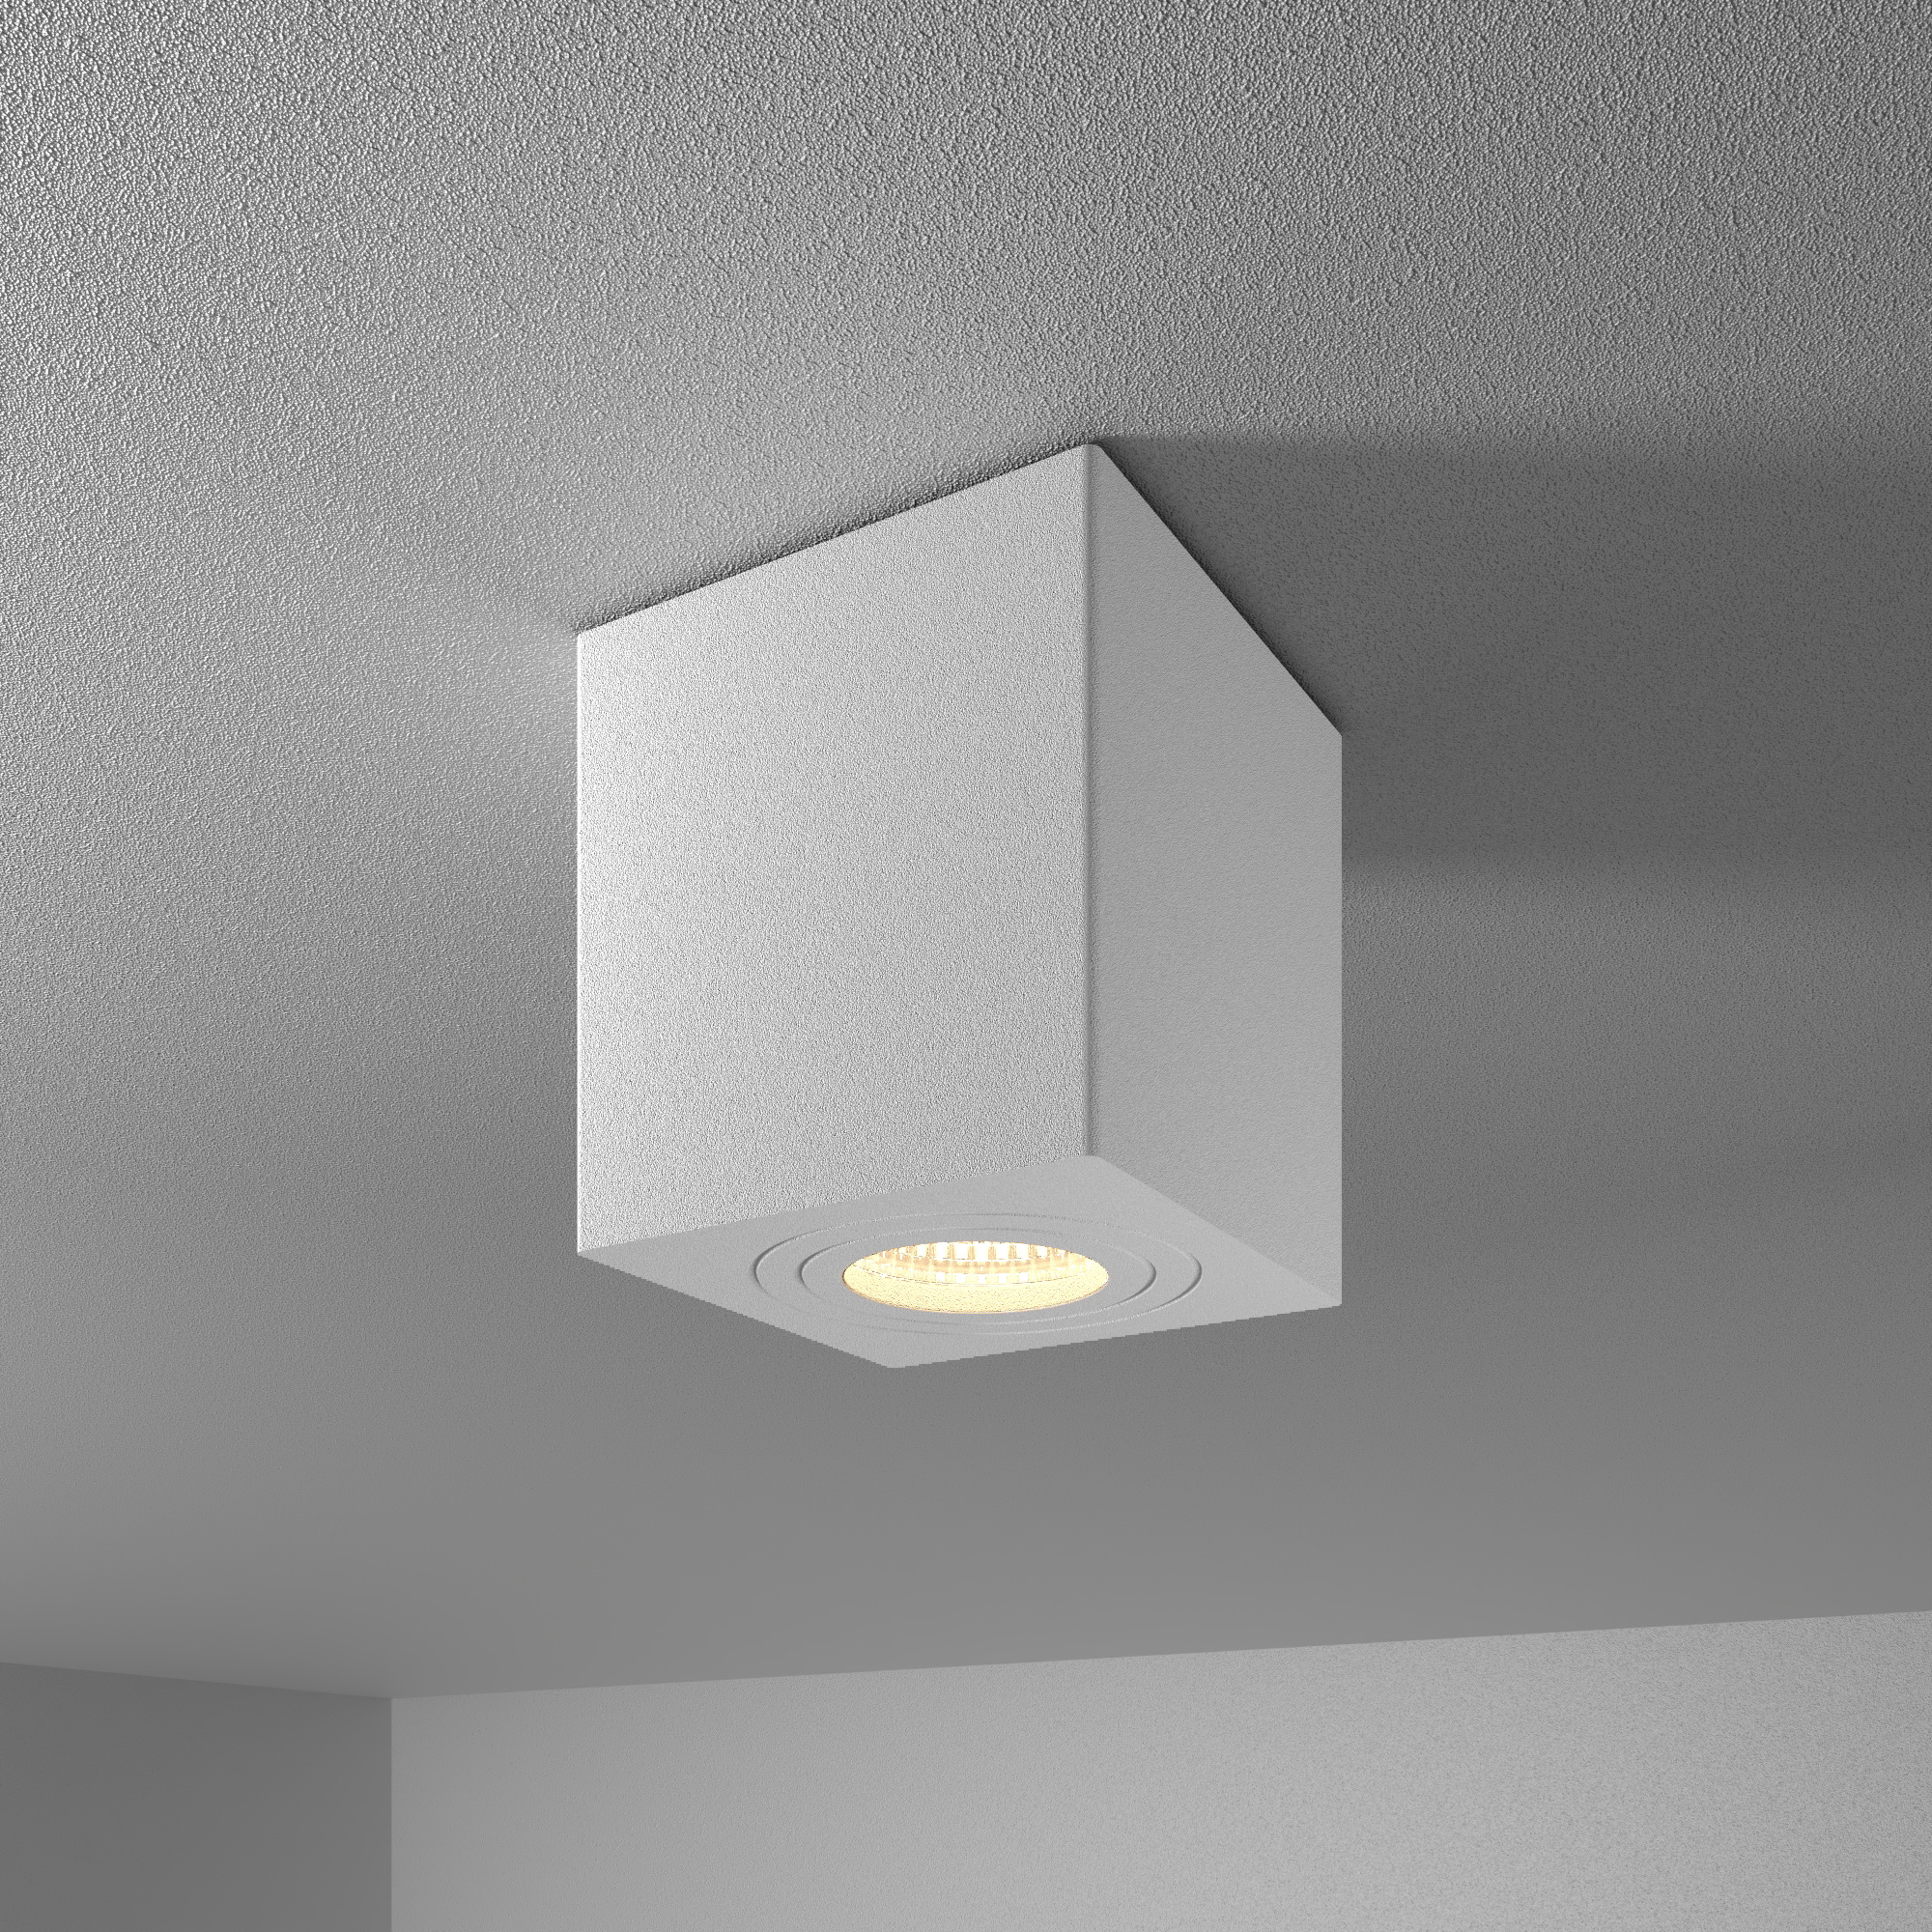 HOFTRONIC™ Gibbon LED opbouw plafondspot - Vierkant - IP65 waterdicht - 4000K Neutraal wit lichtkleur GU10 - Plafondlamp geschikt voor badkamer - Wit